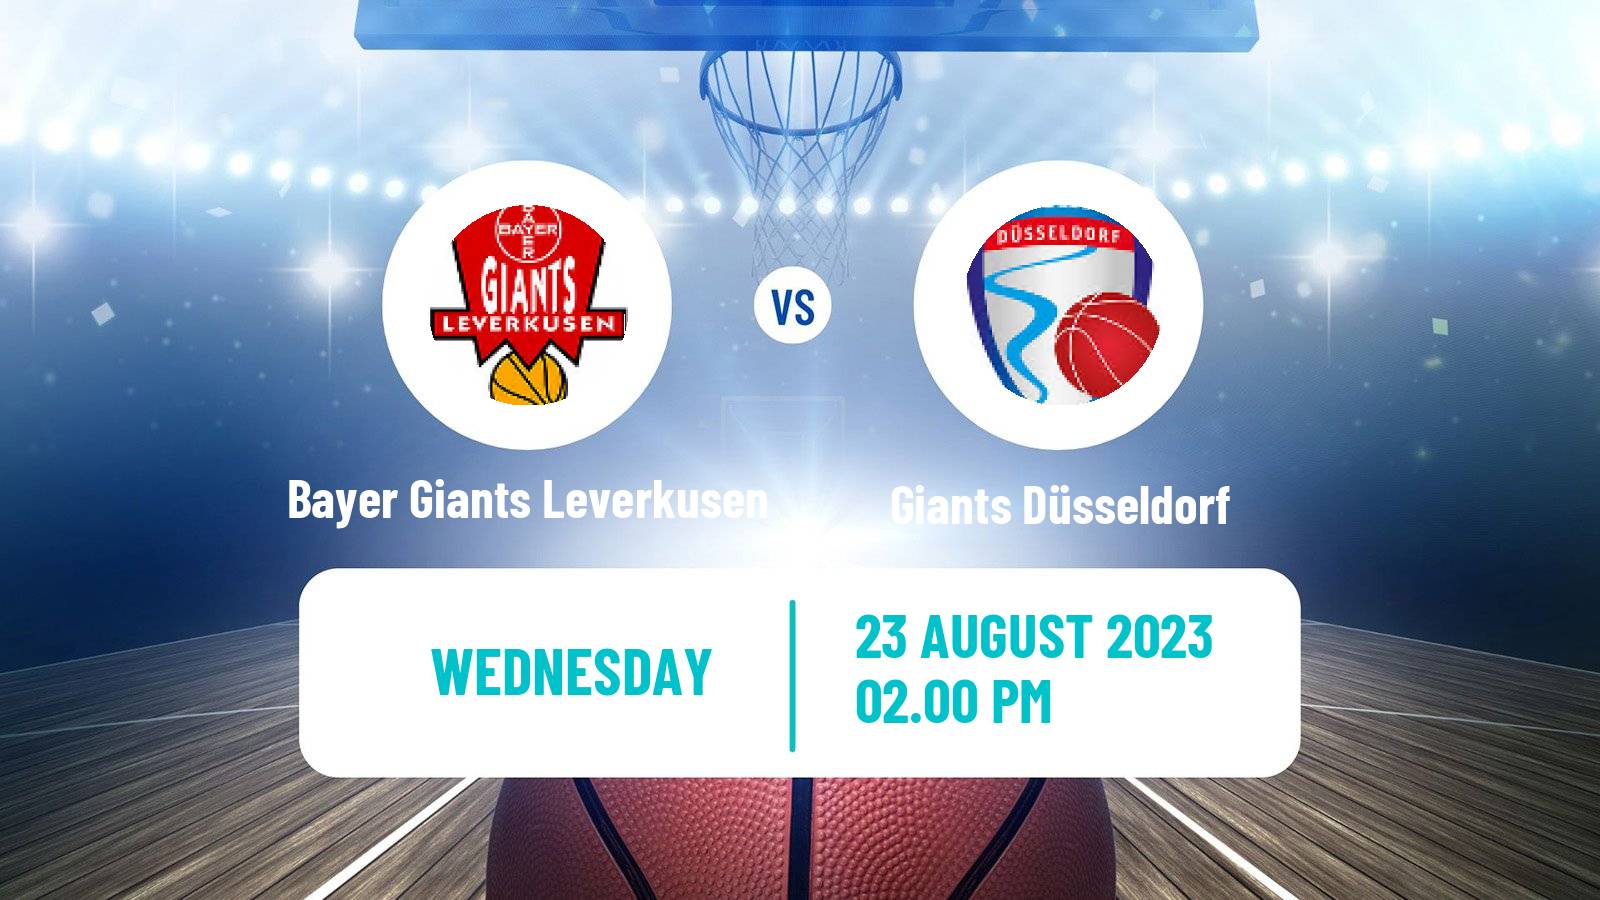 Basketball Club Friendly Basketball Bayer Giants Leverkusen - Giants Düsseldorf